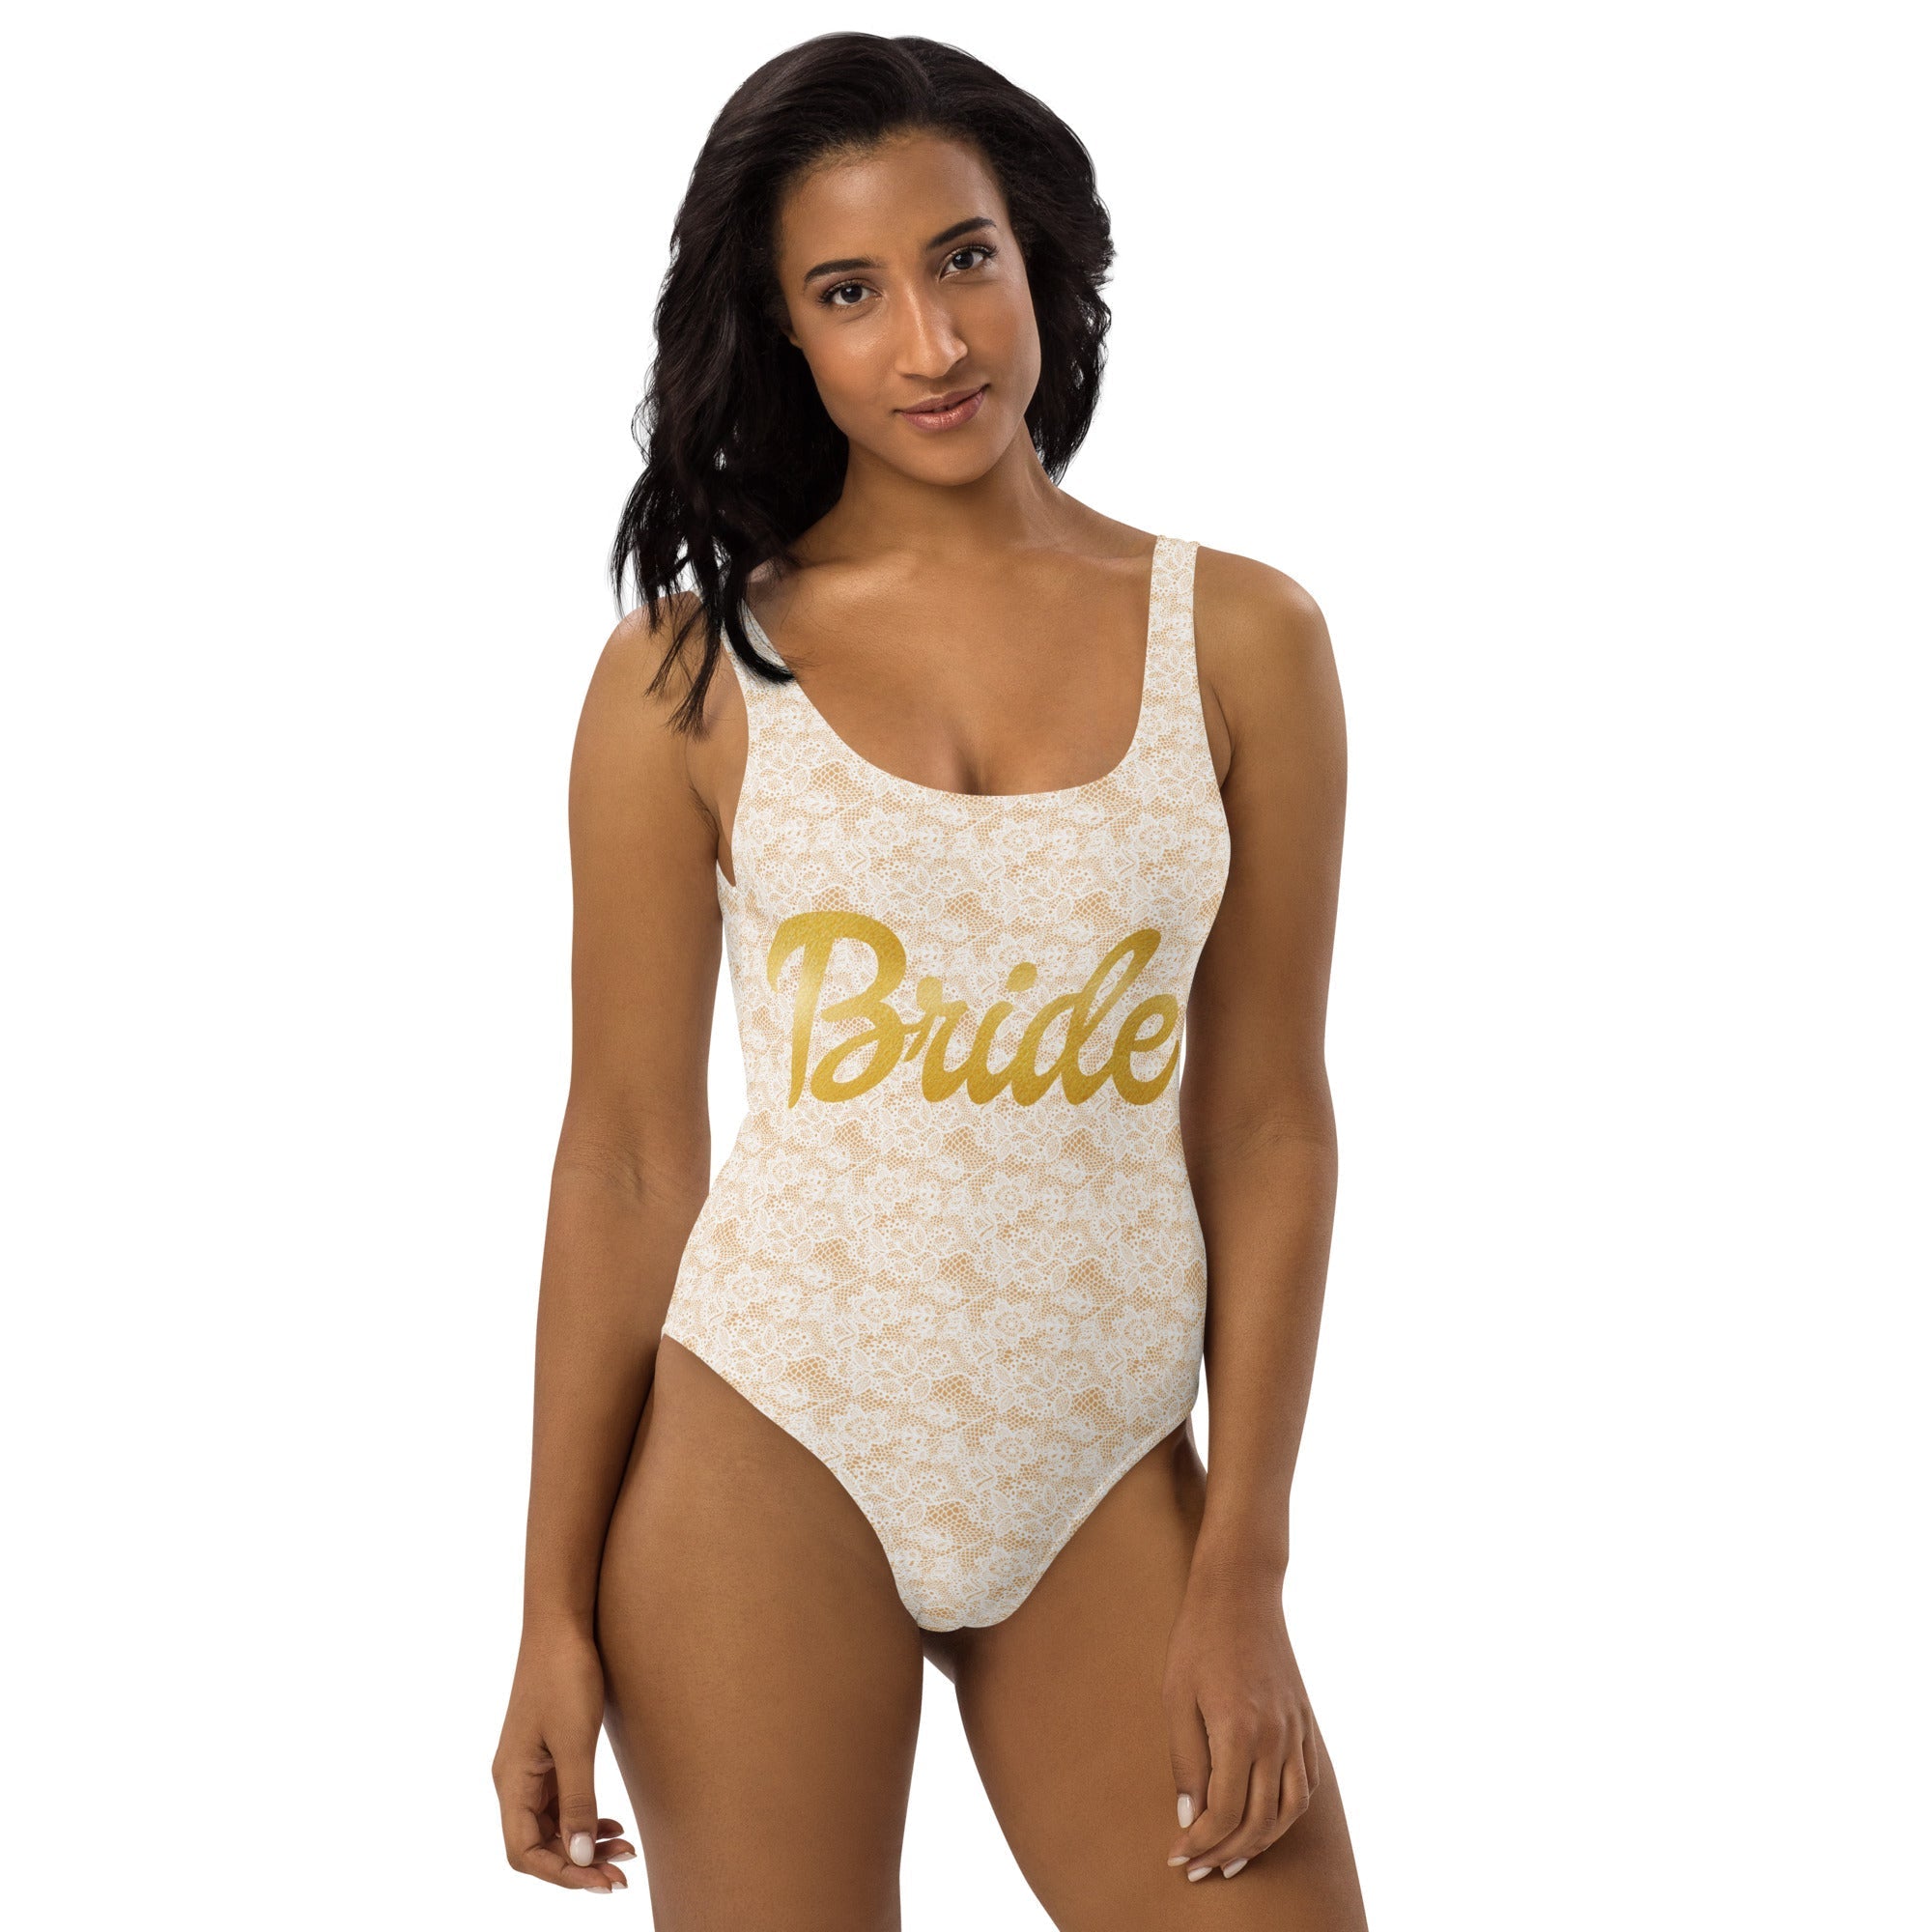 Bride One-Piece Swimsuit